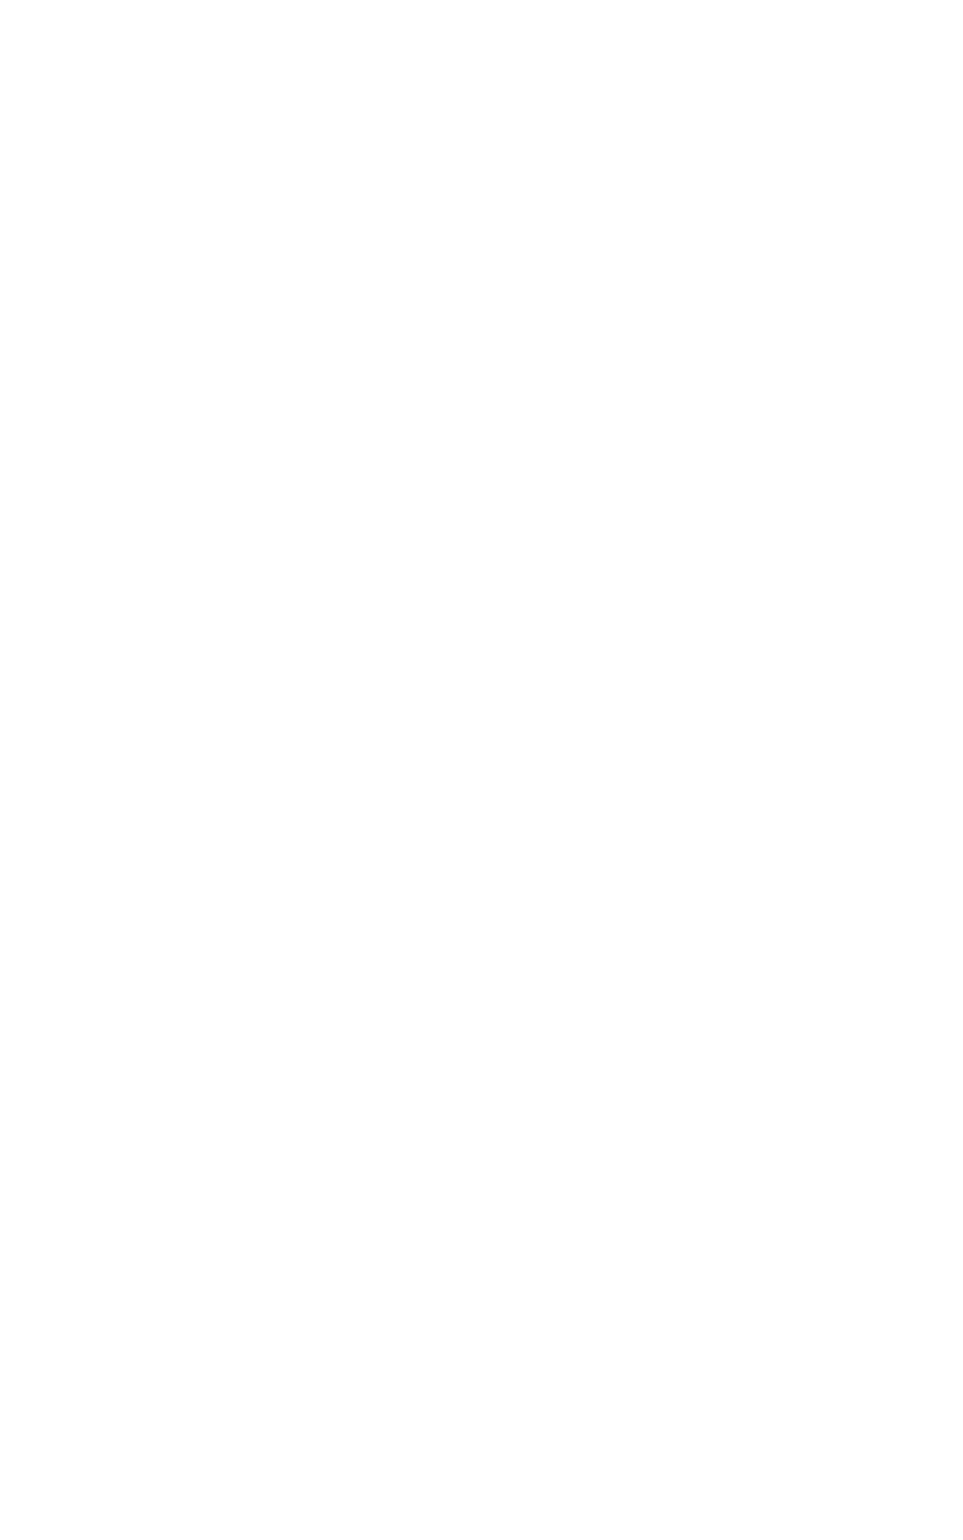 Fluence Energy logo pour fonds sombres (PNG transparent)